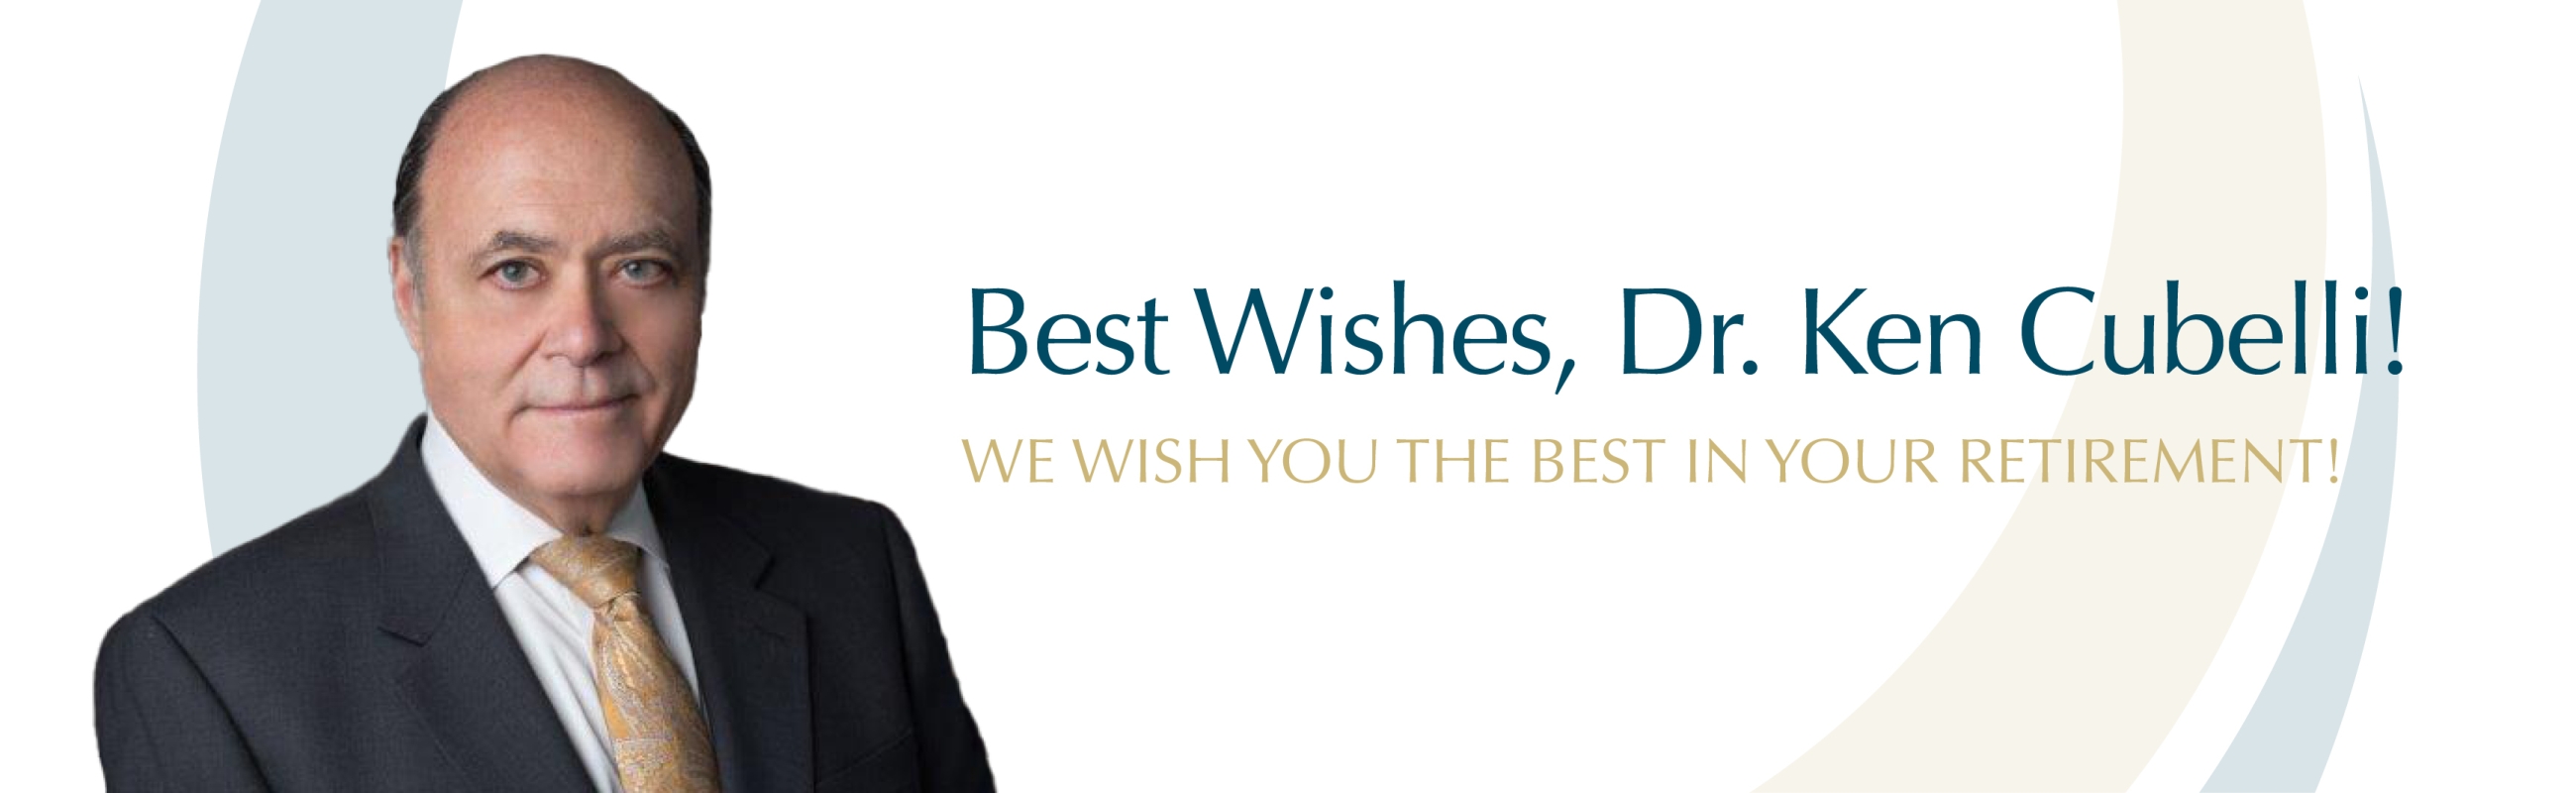 Best Wishes, Dr. Ken Cubelli!